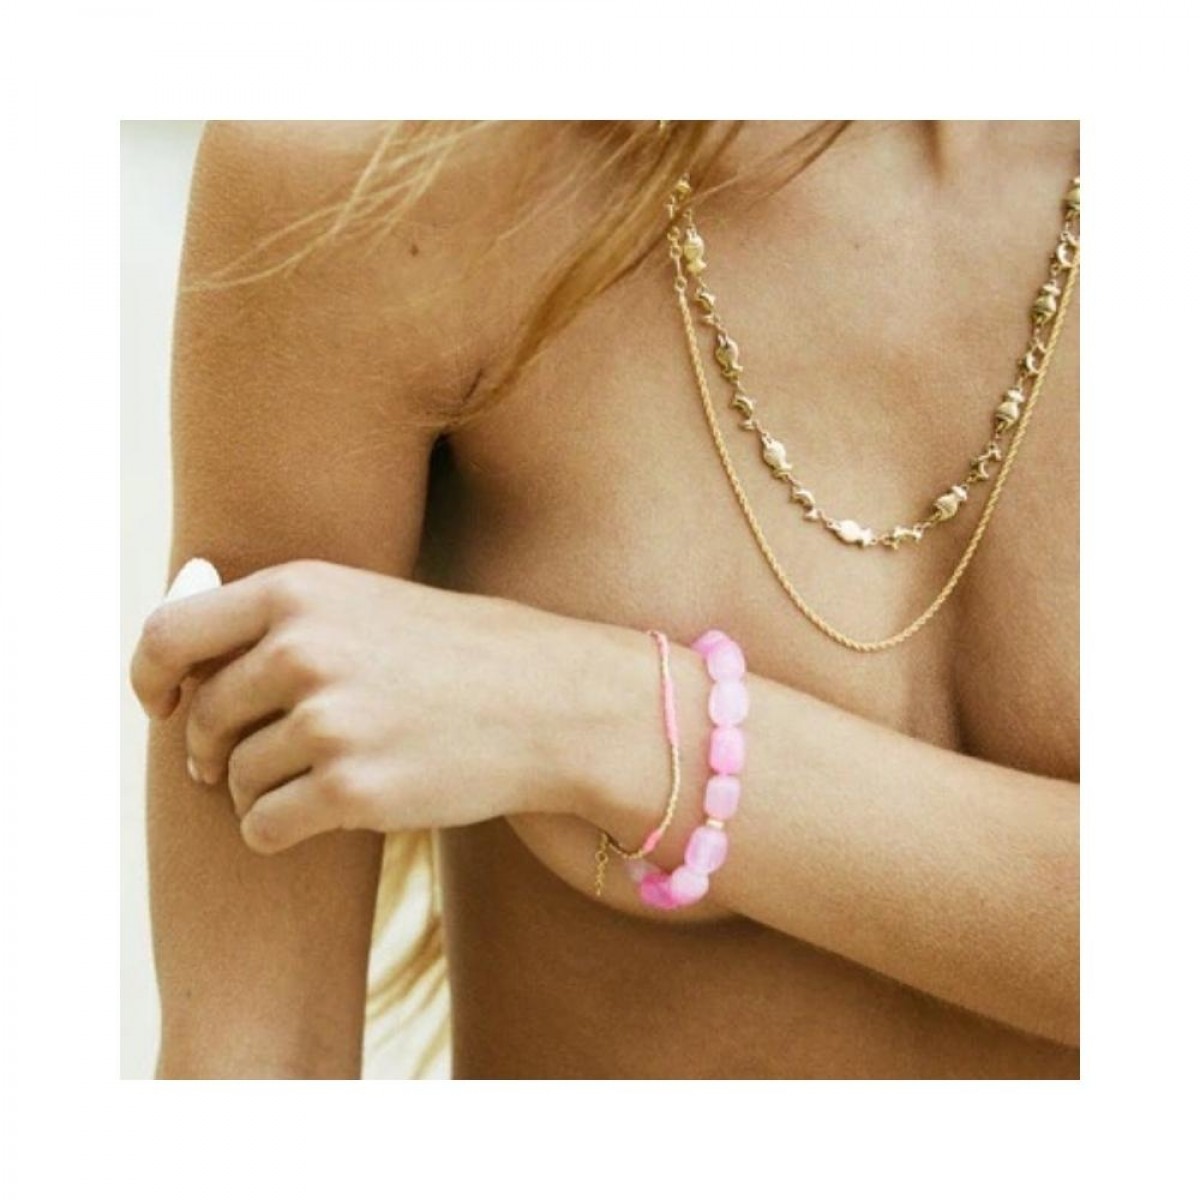 anni lu pink lake bracelet - pink - model arm